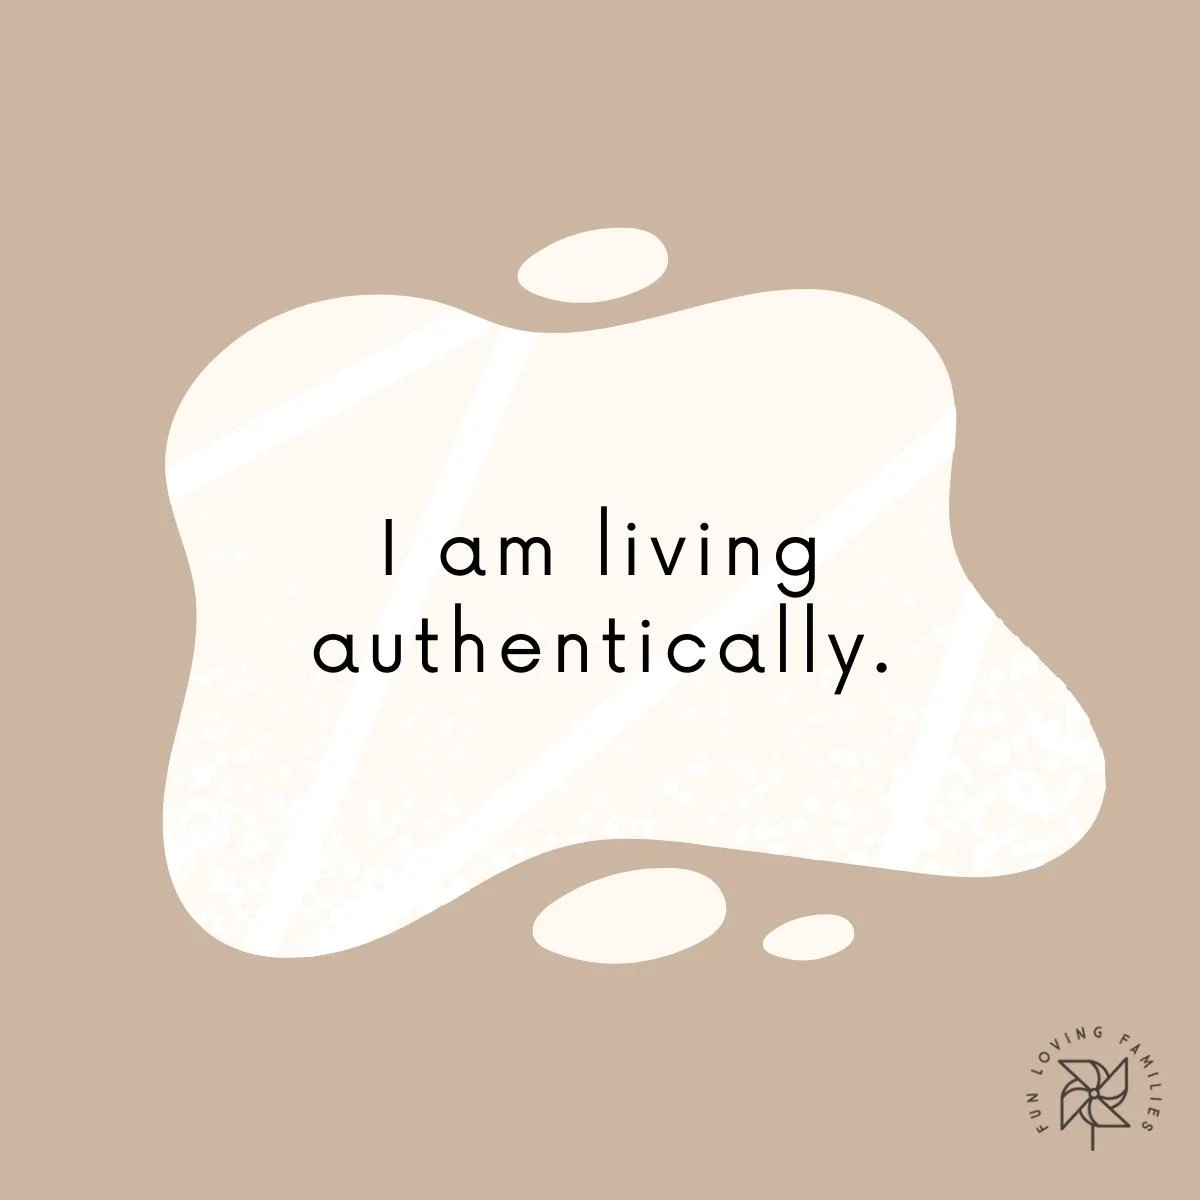 I am living authentically affirmation